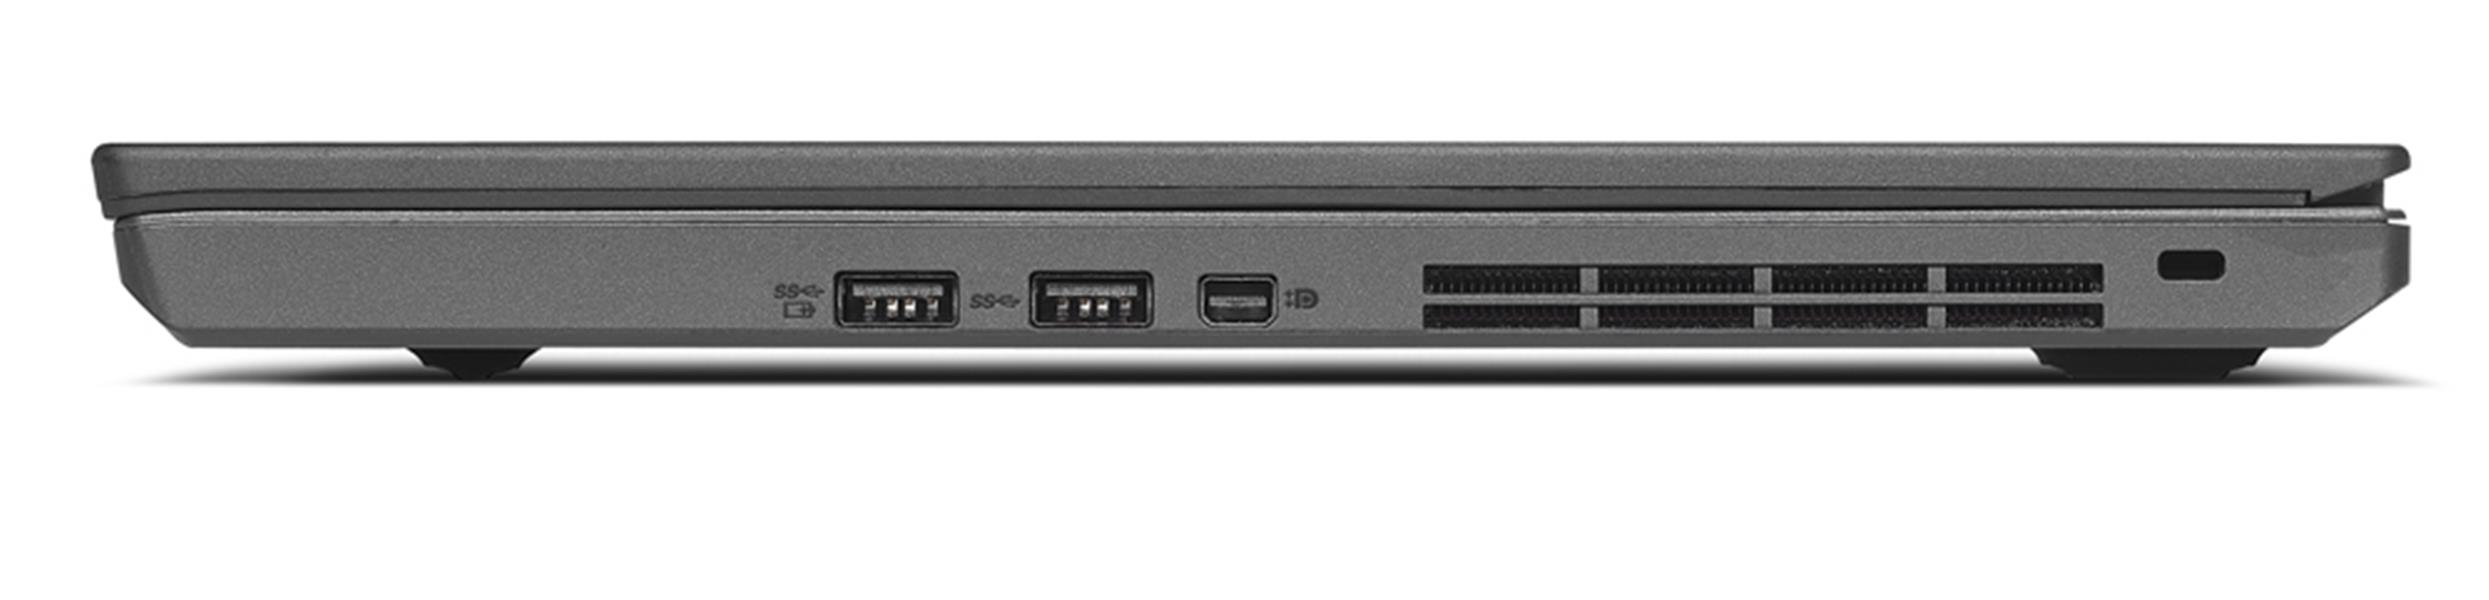 LENOVO ThinkPad T550 15 6 inch HD Core i5-5300U 8GB 512GB SSD wifi LAN Windows 10Pro - refurbished